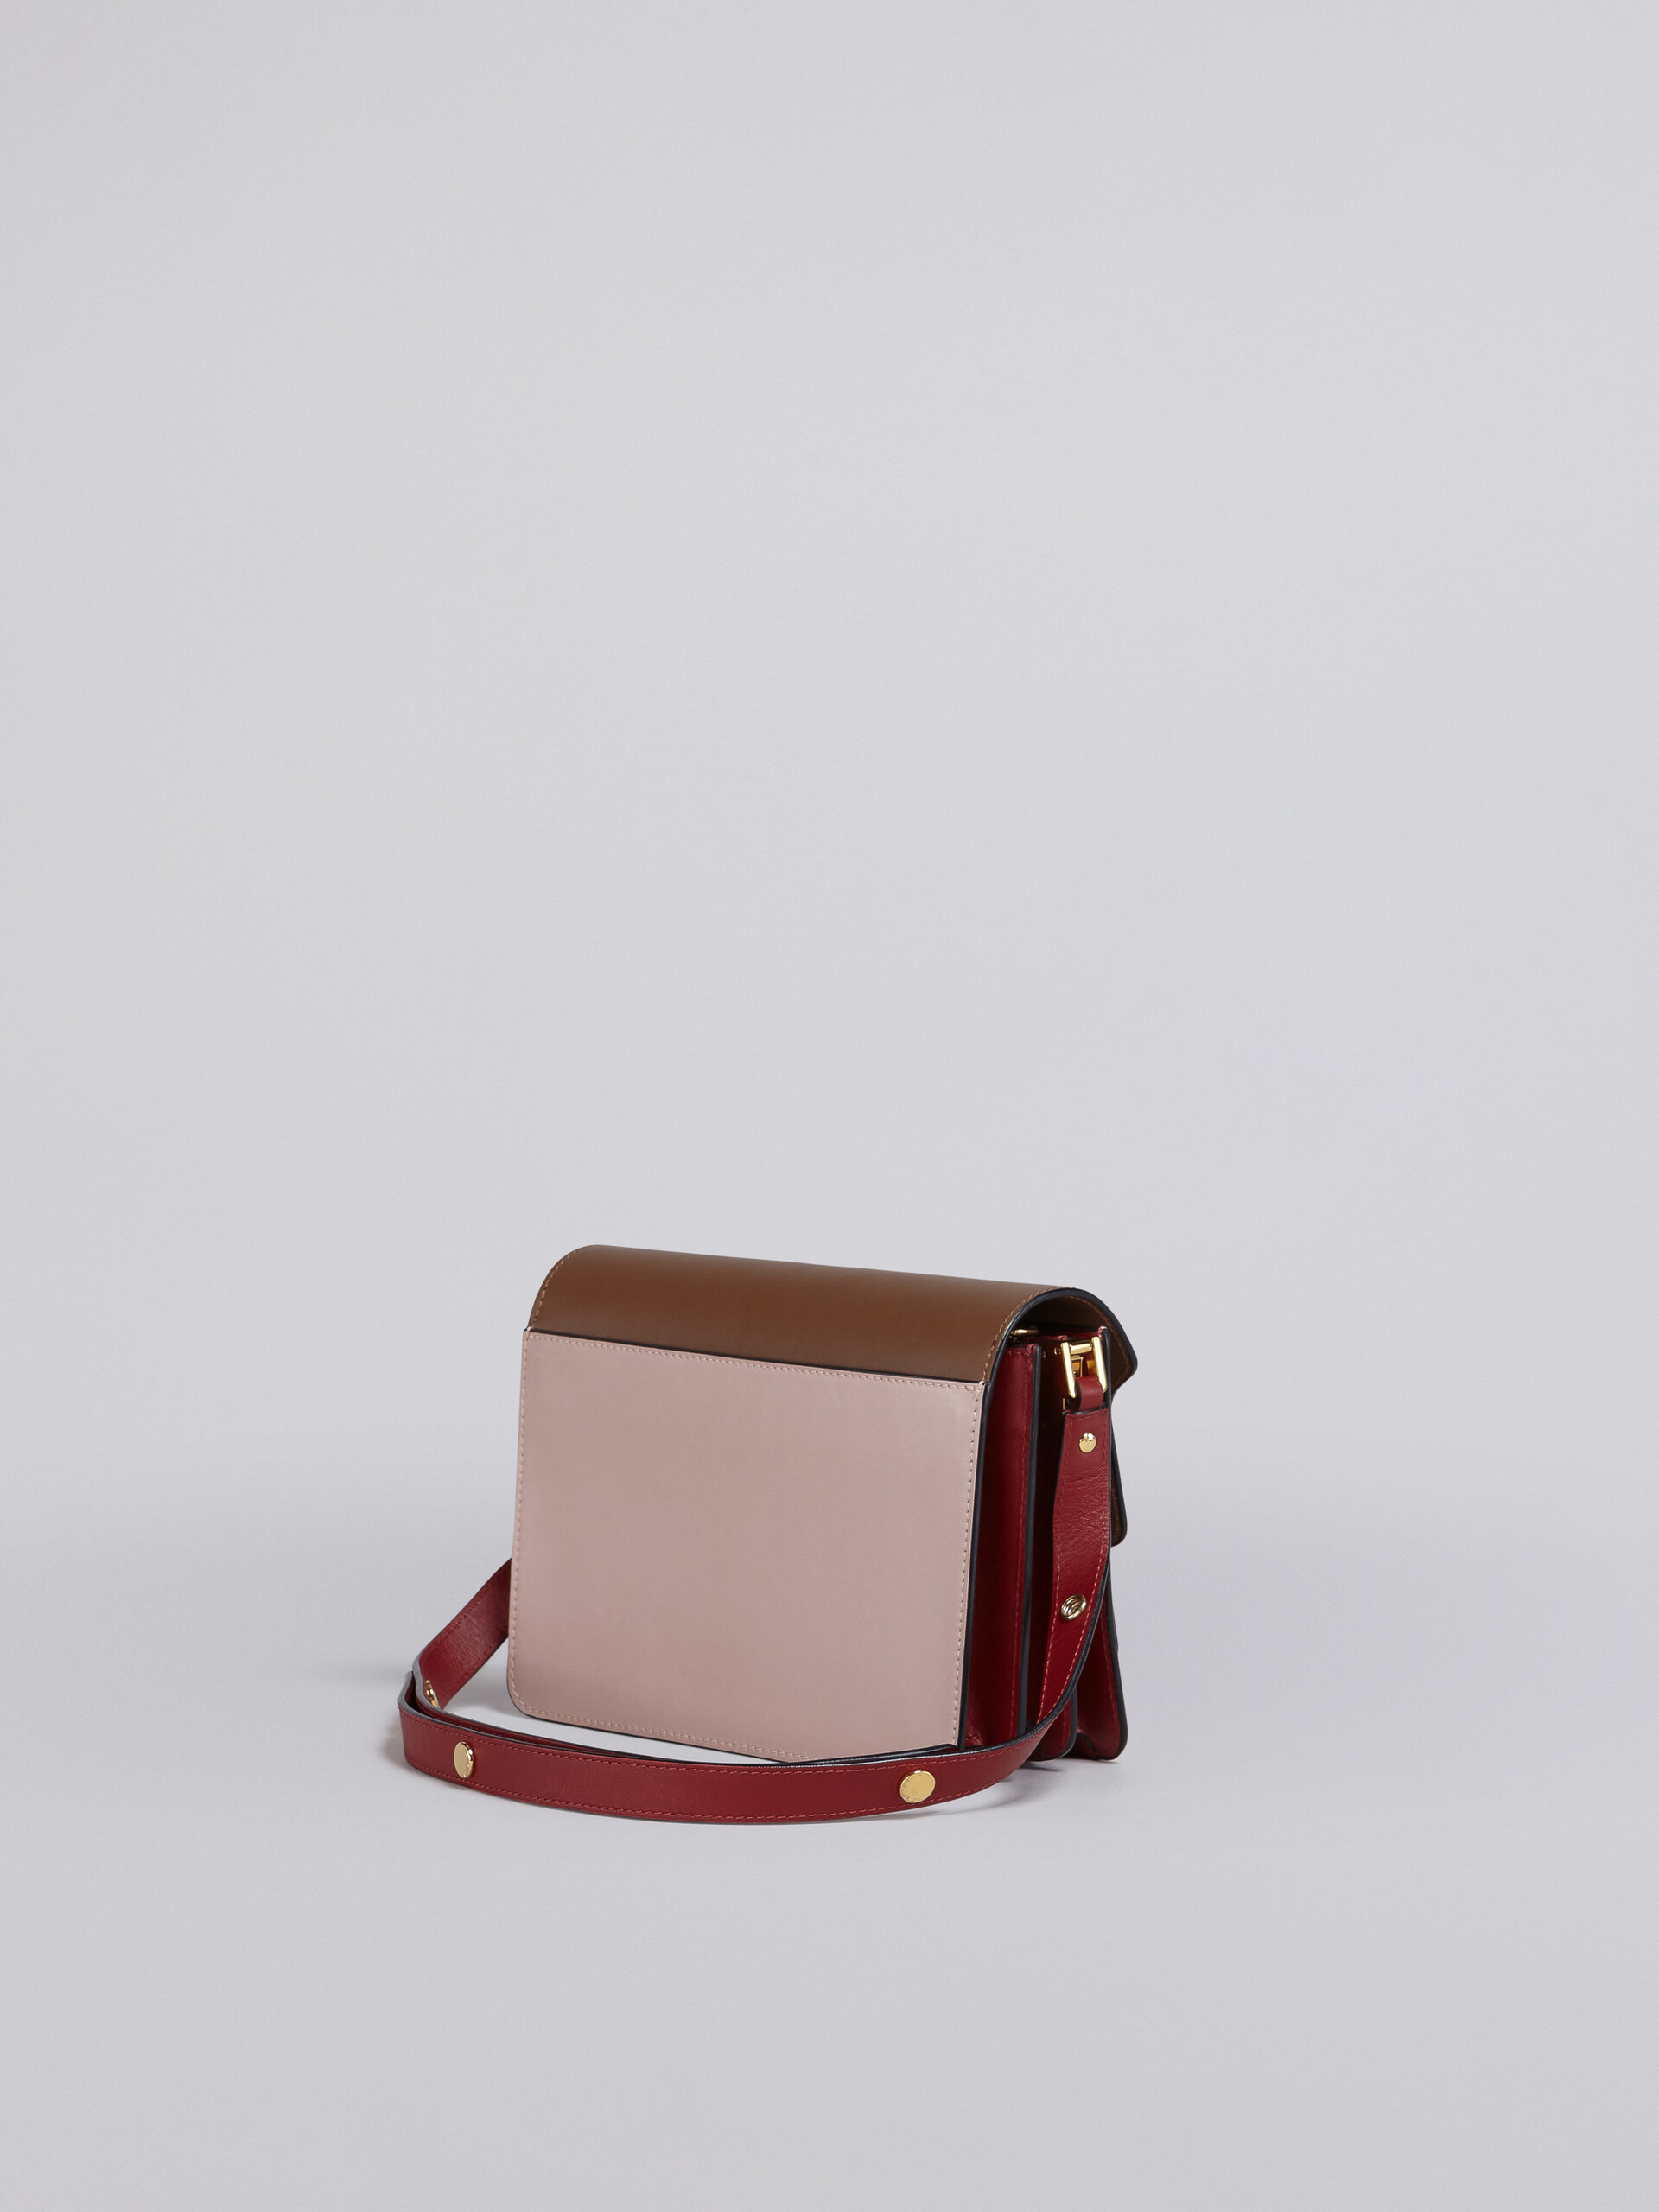 TRUNK medium bag in brown pink and red leather - Shoulder Bag - Image 2